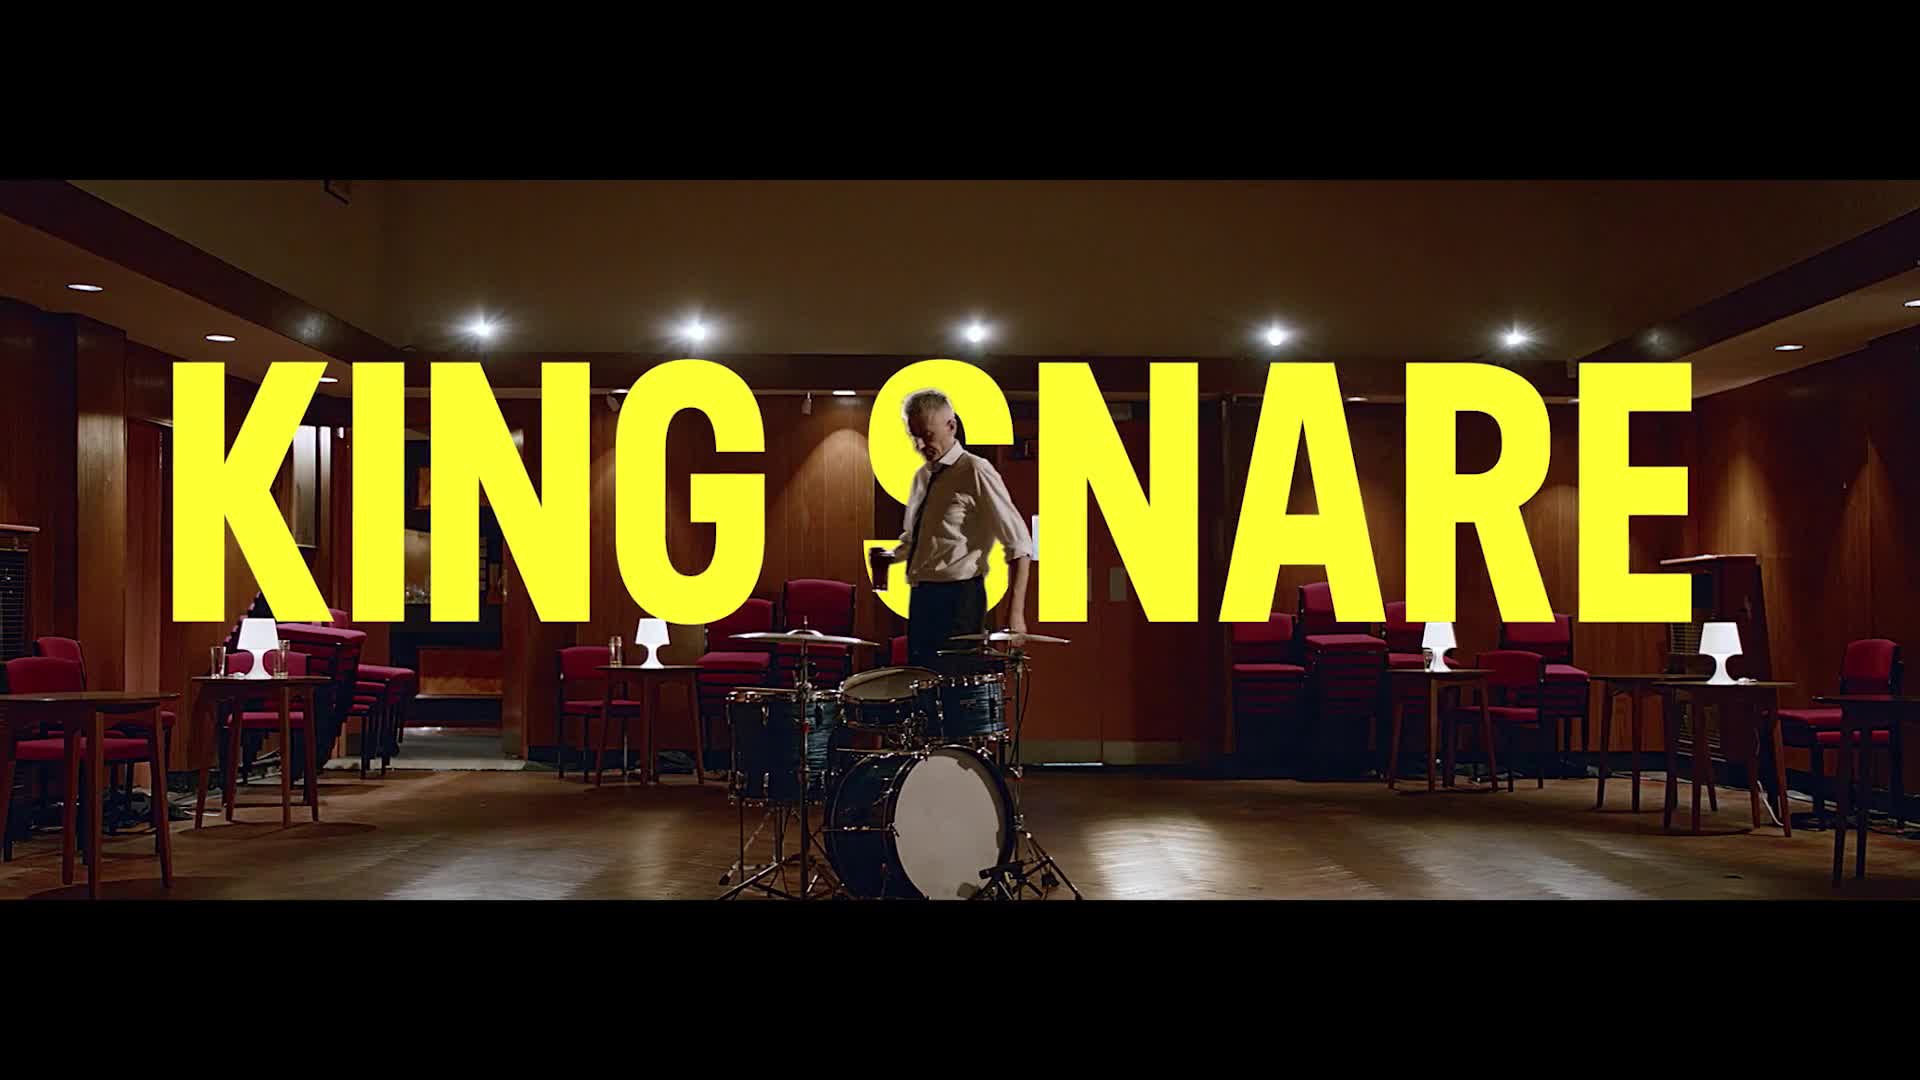 Greene King Commercial: King Snare